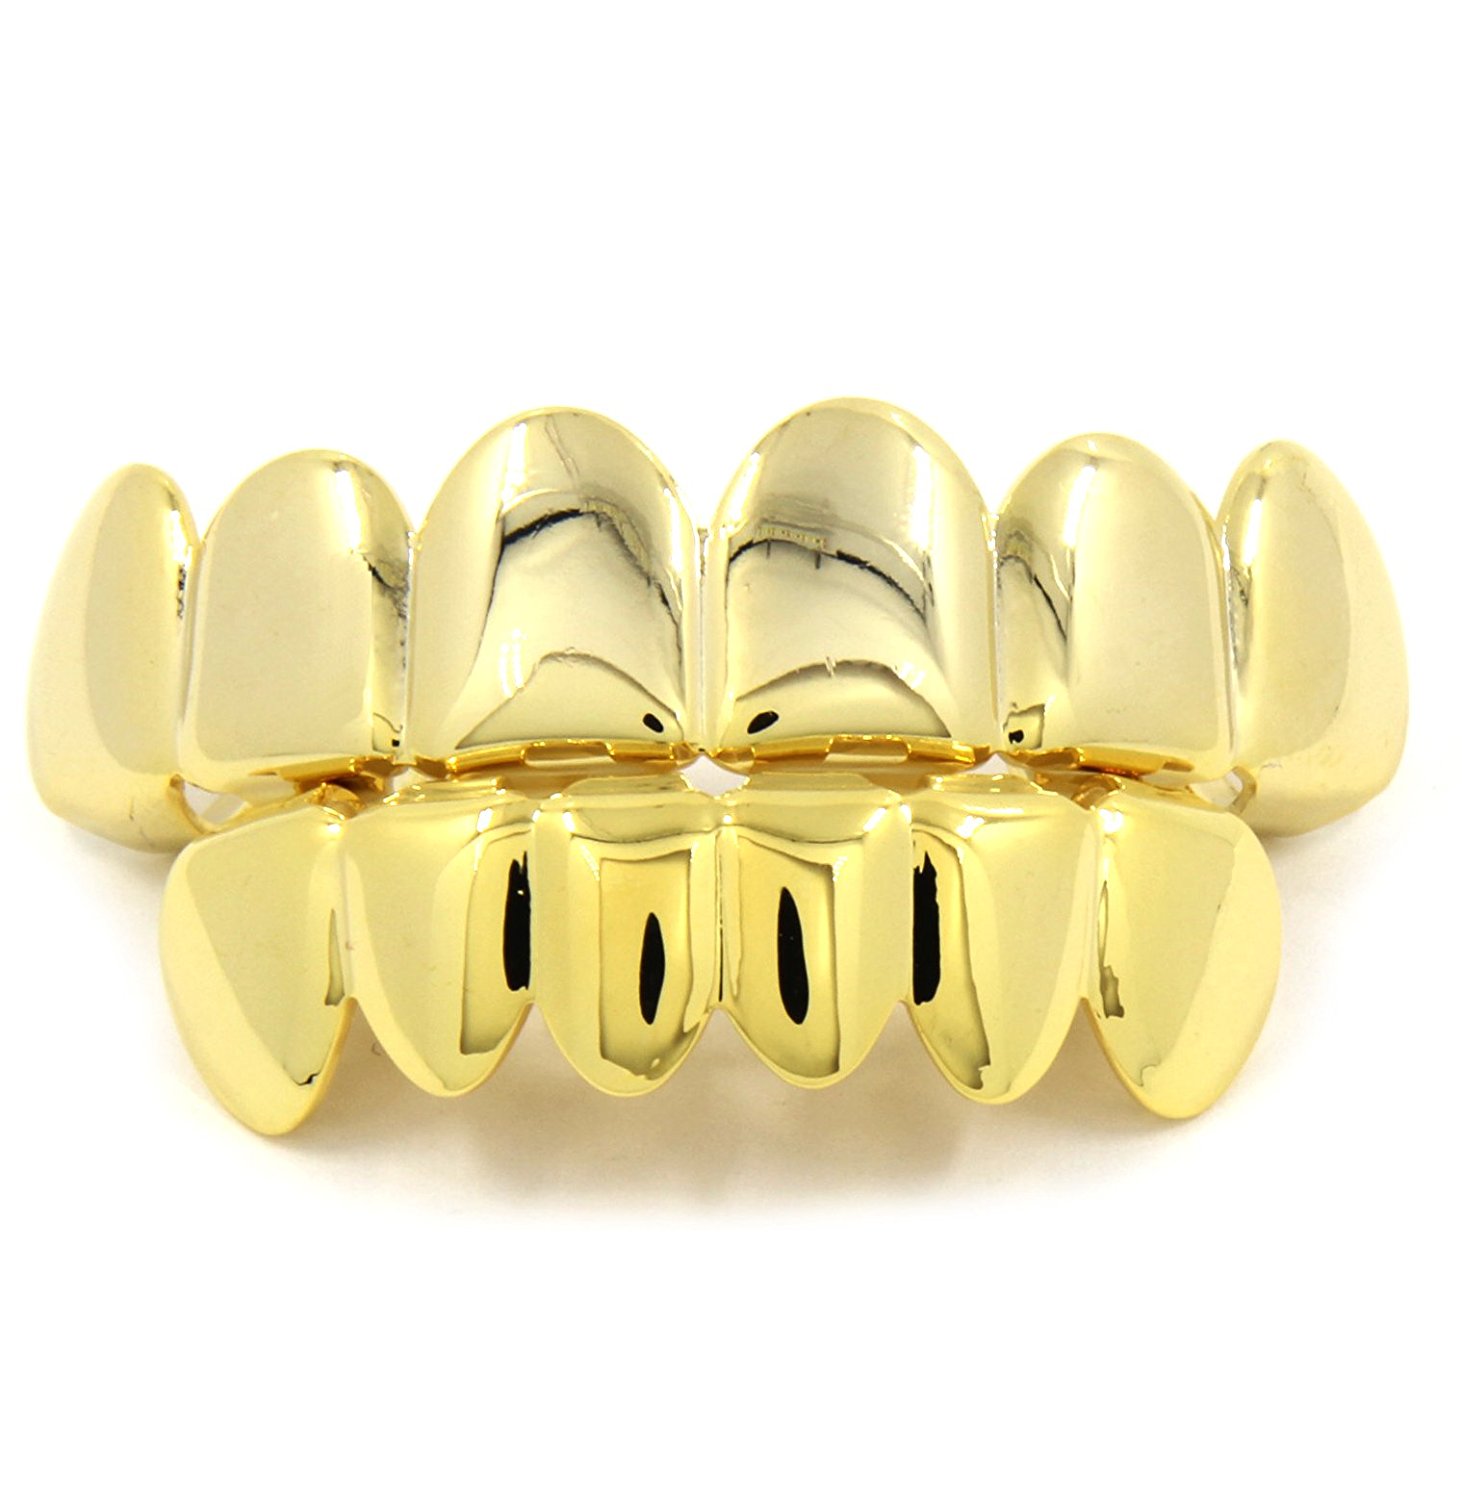 Amazon.com: New Custom Fit 14k Gold Plated Hip Hop Teeth Grillz Caps ...